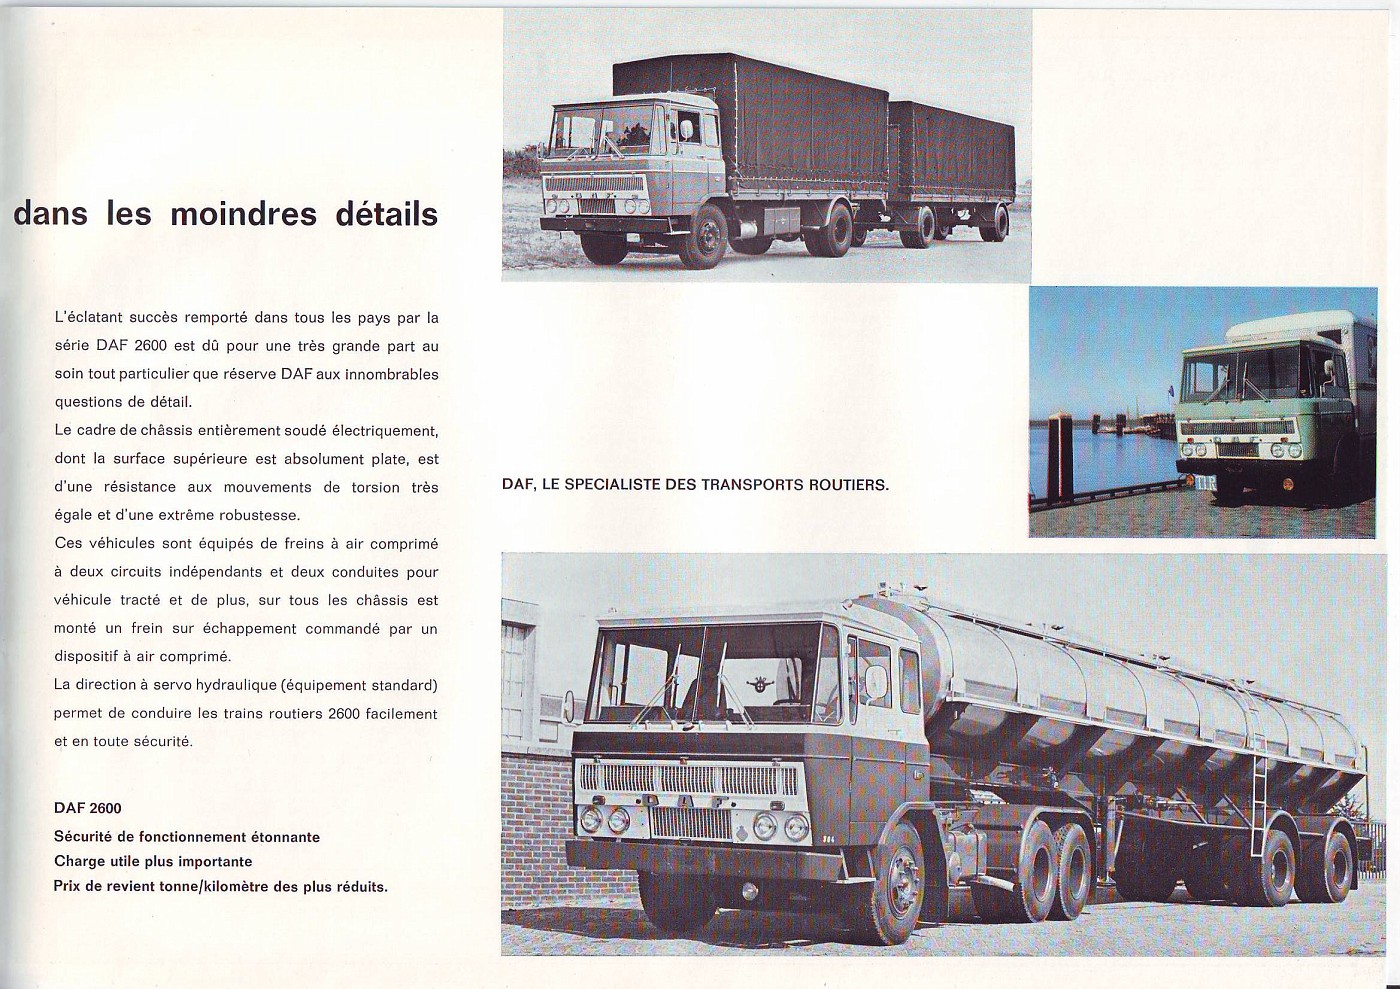 DAF 2600 1966 album | Dutch Model Truck Club | Fotki.com, photo and ...